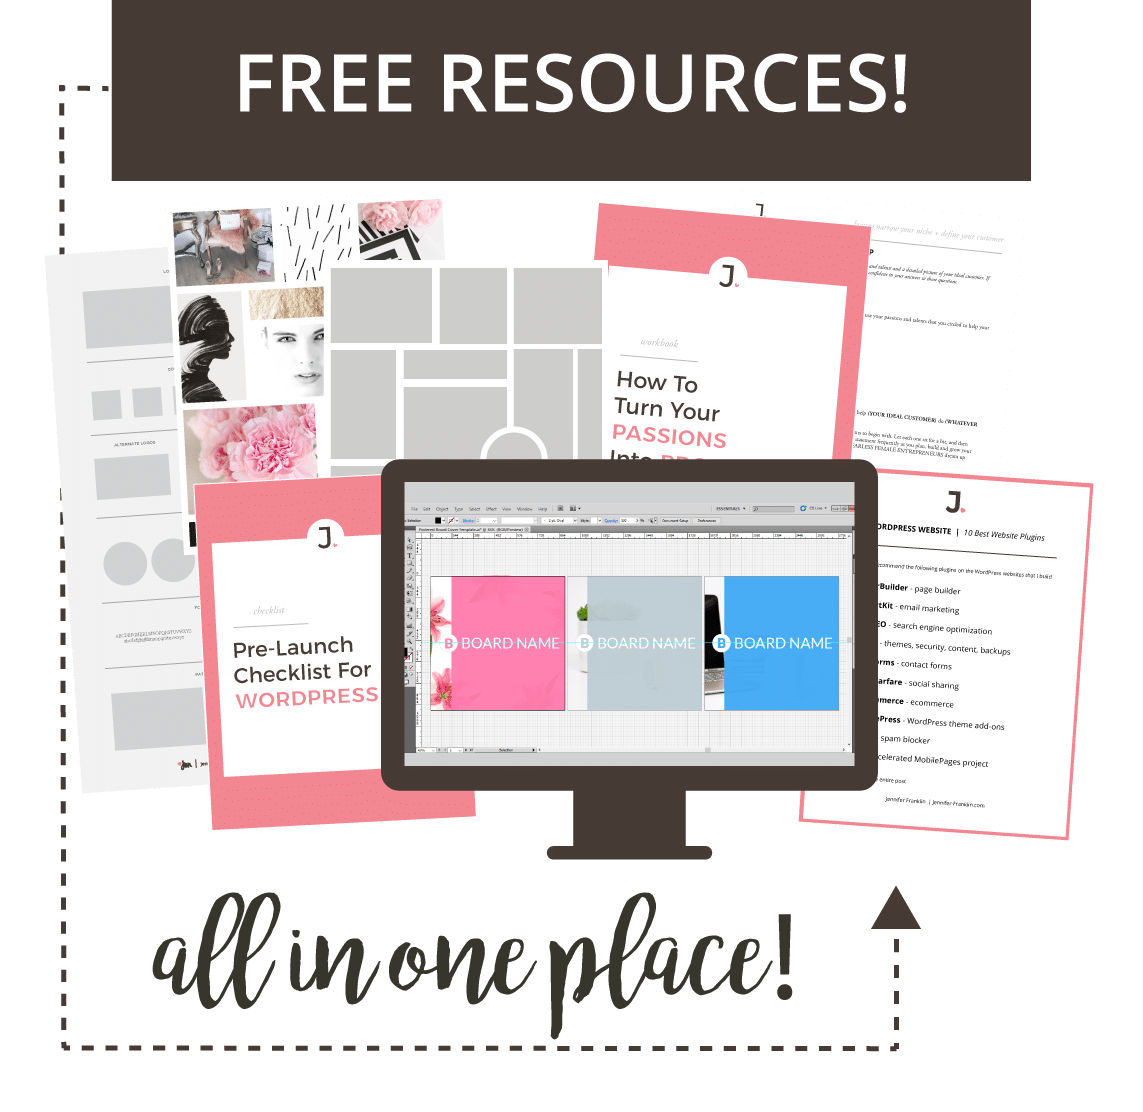 Free Library Of Resources | Jennifer-Franklin.com